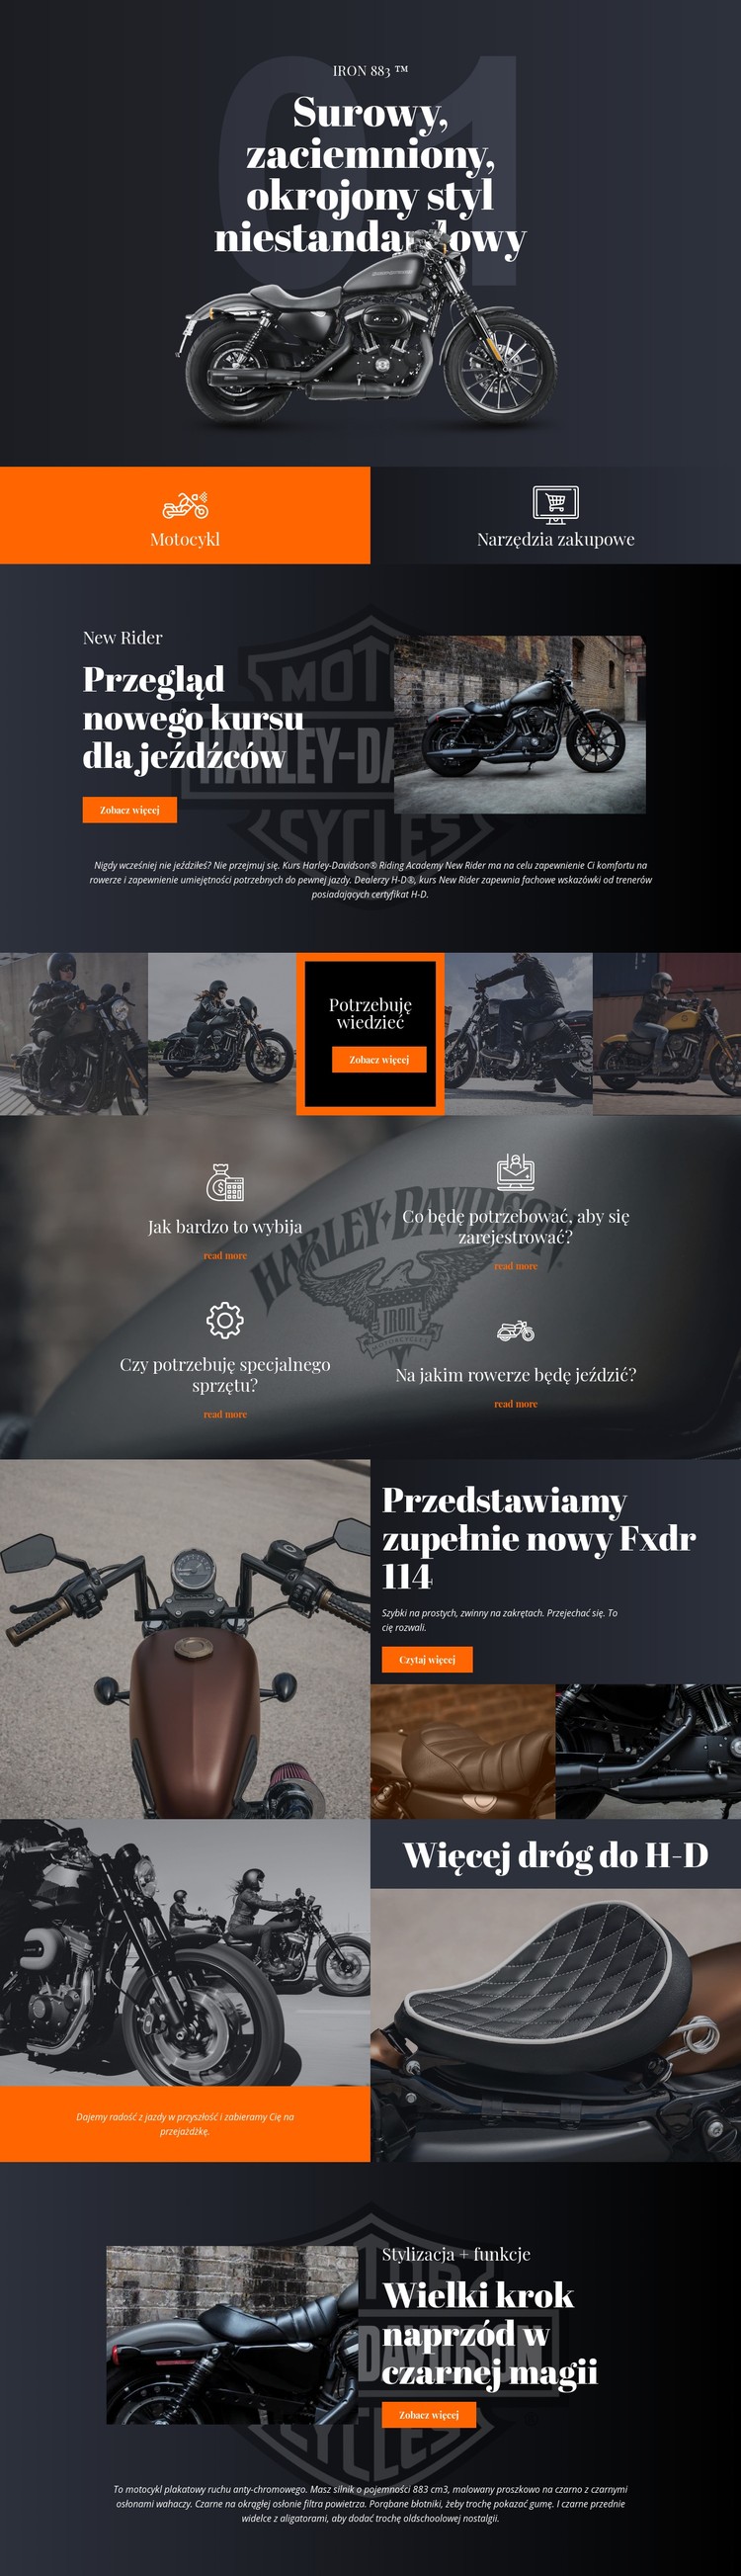 Harley Davidson Szablon CSS